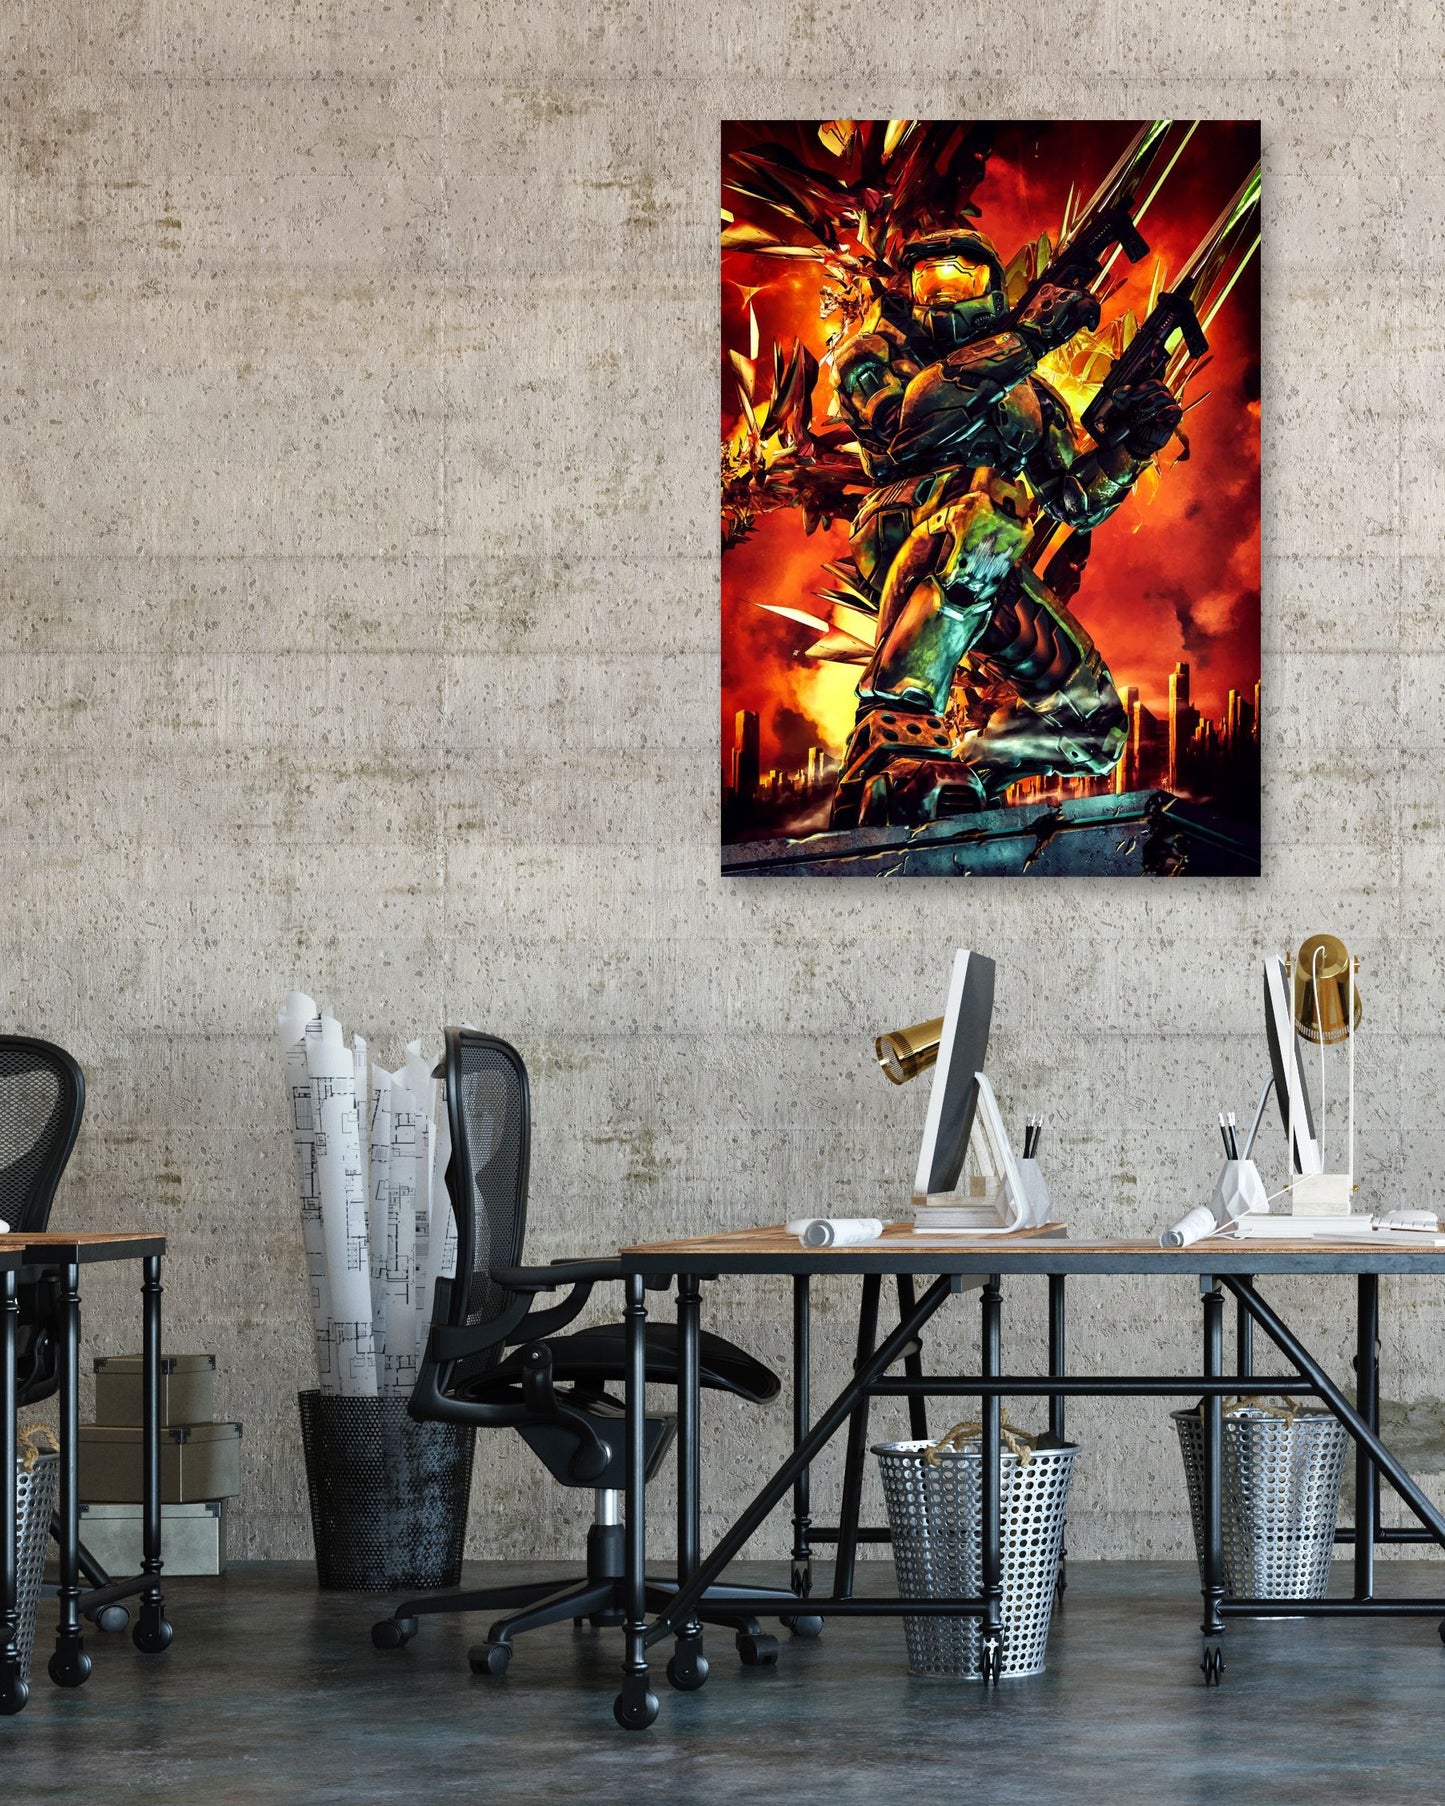 Halo 2 ultimate cover art - @SyanArt